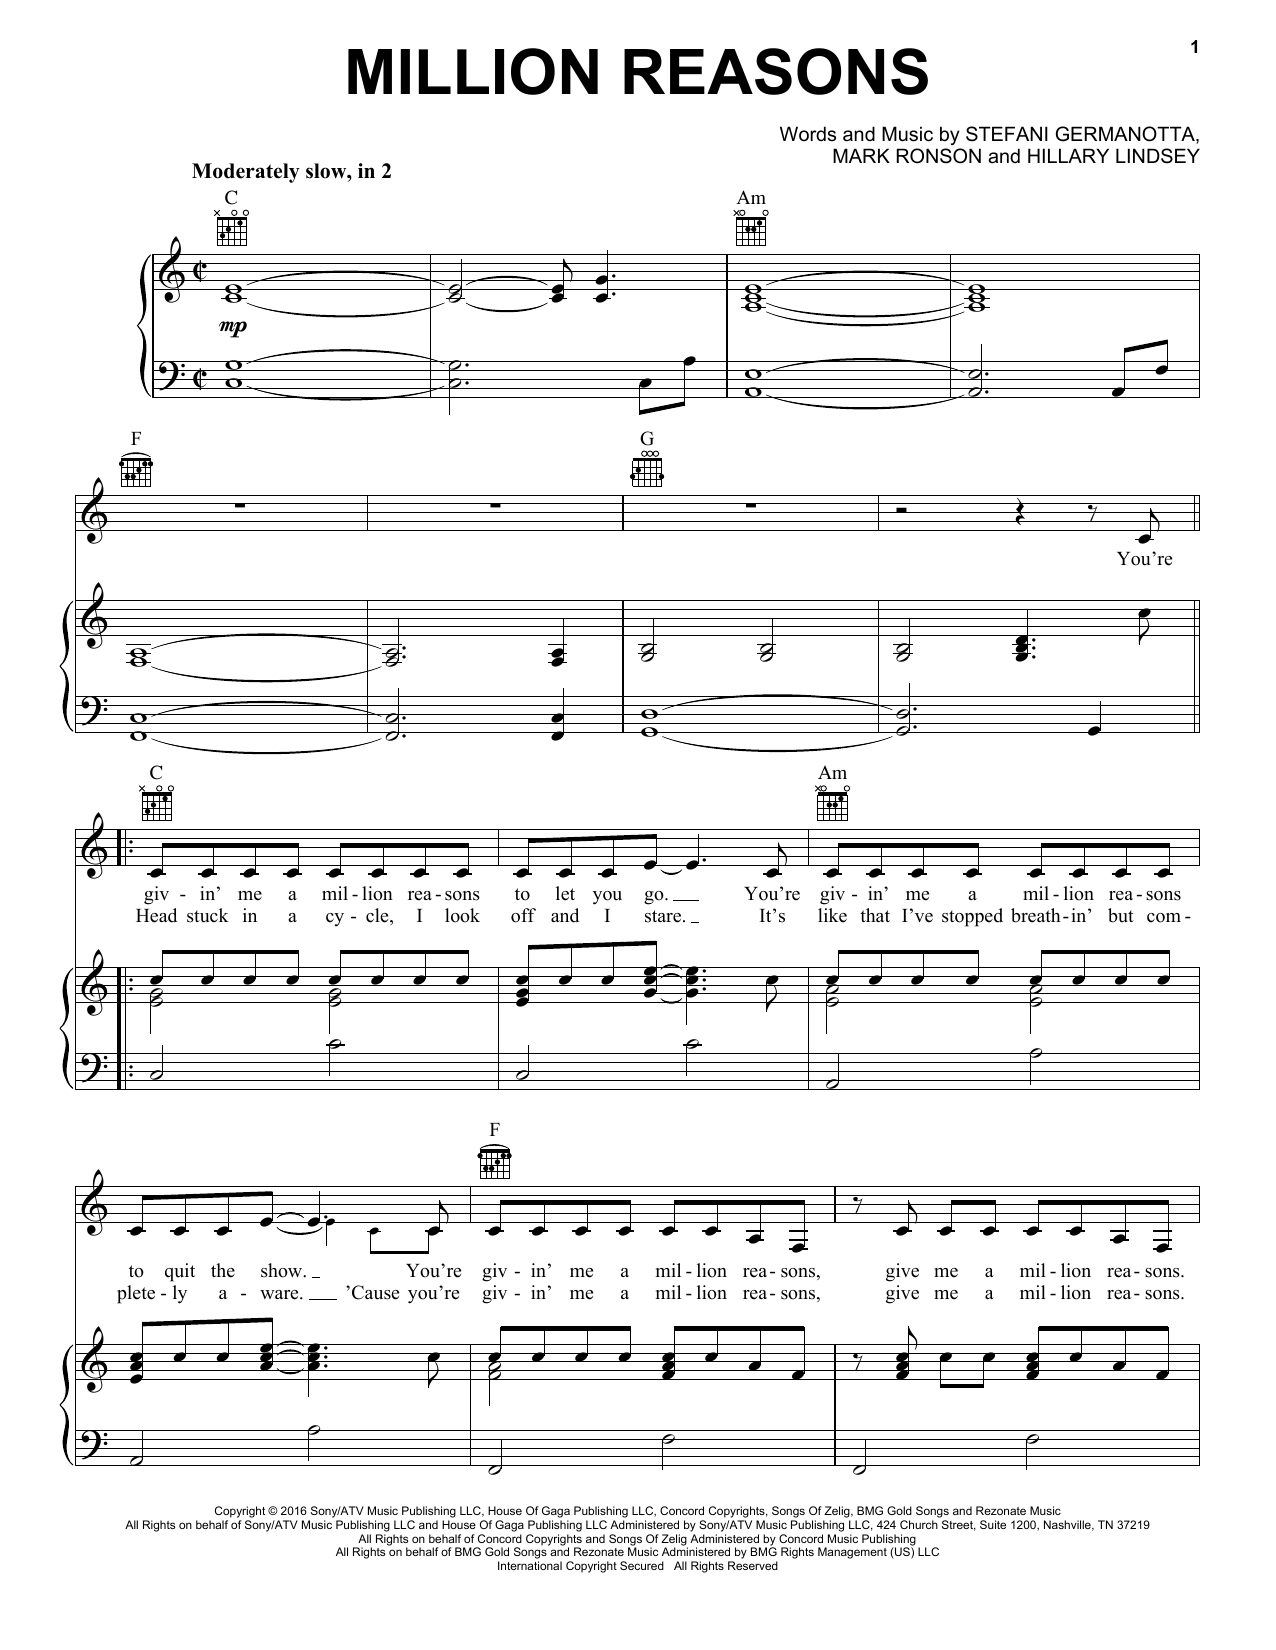 Lady Gaga Million Reasons Sheet Music Notes & Chords for Melody Line, Lyrics & Chords - Download or Print PDF